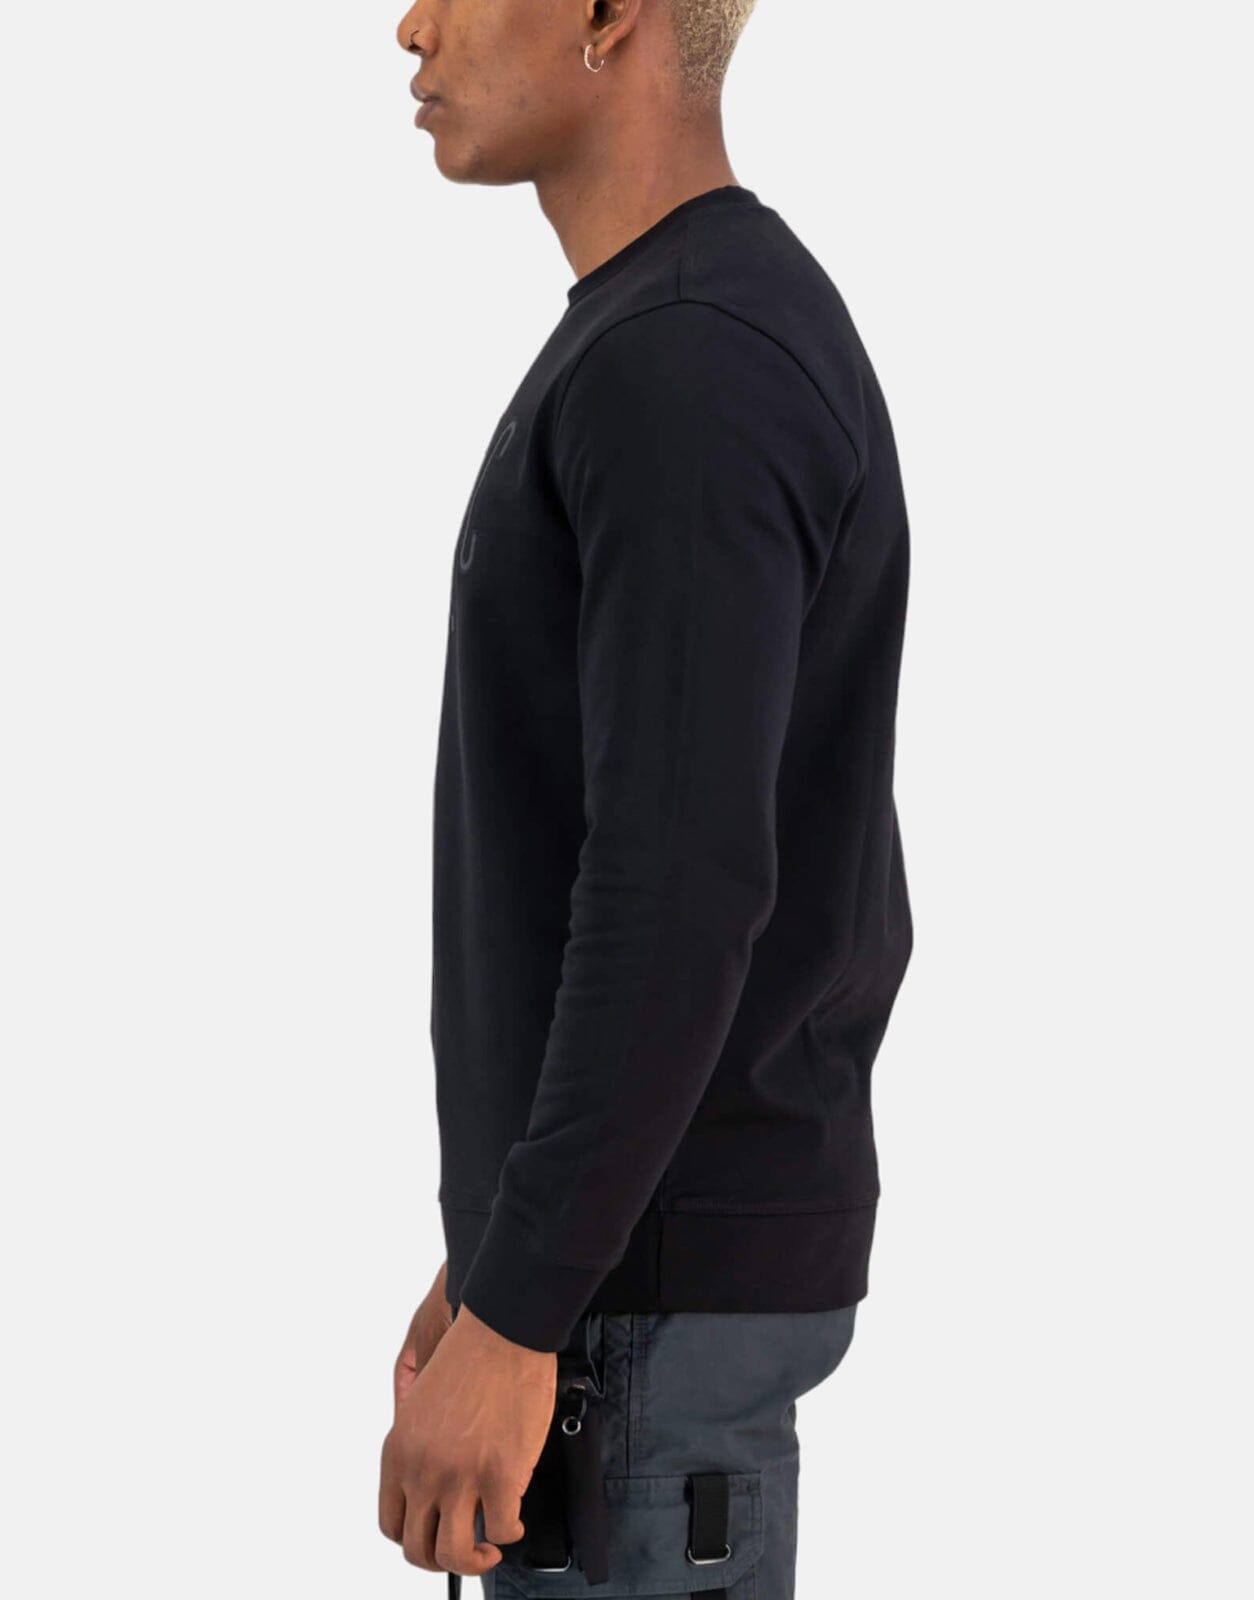 SPCC Acker Black Sweatshirt - Subwear